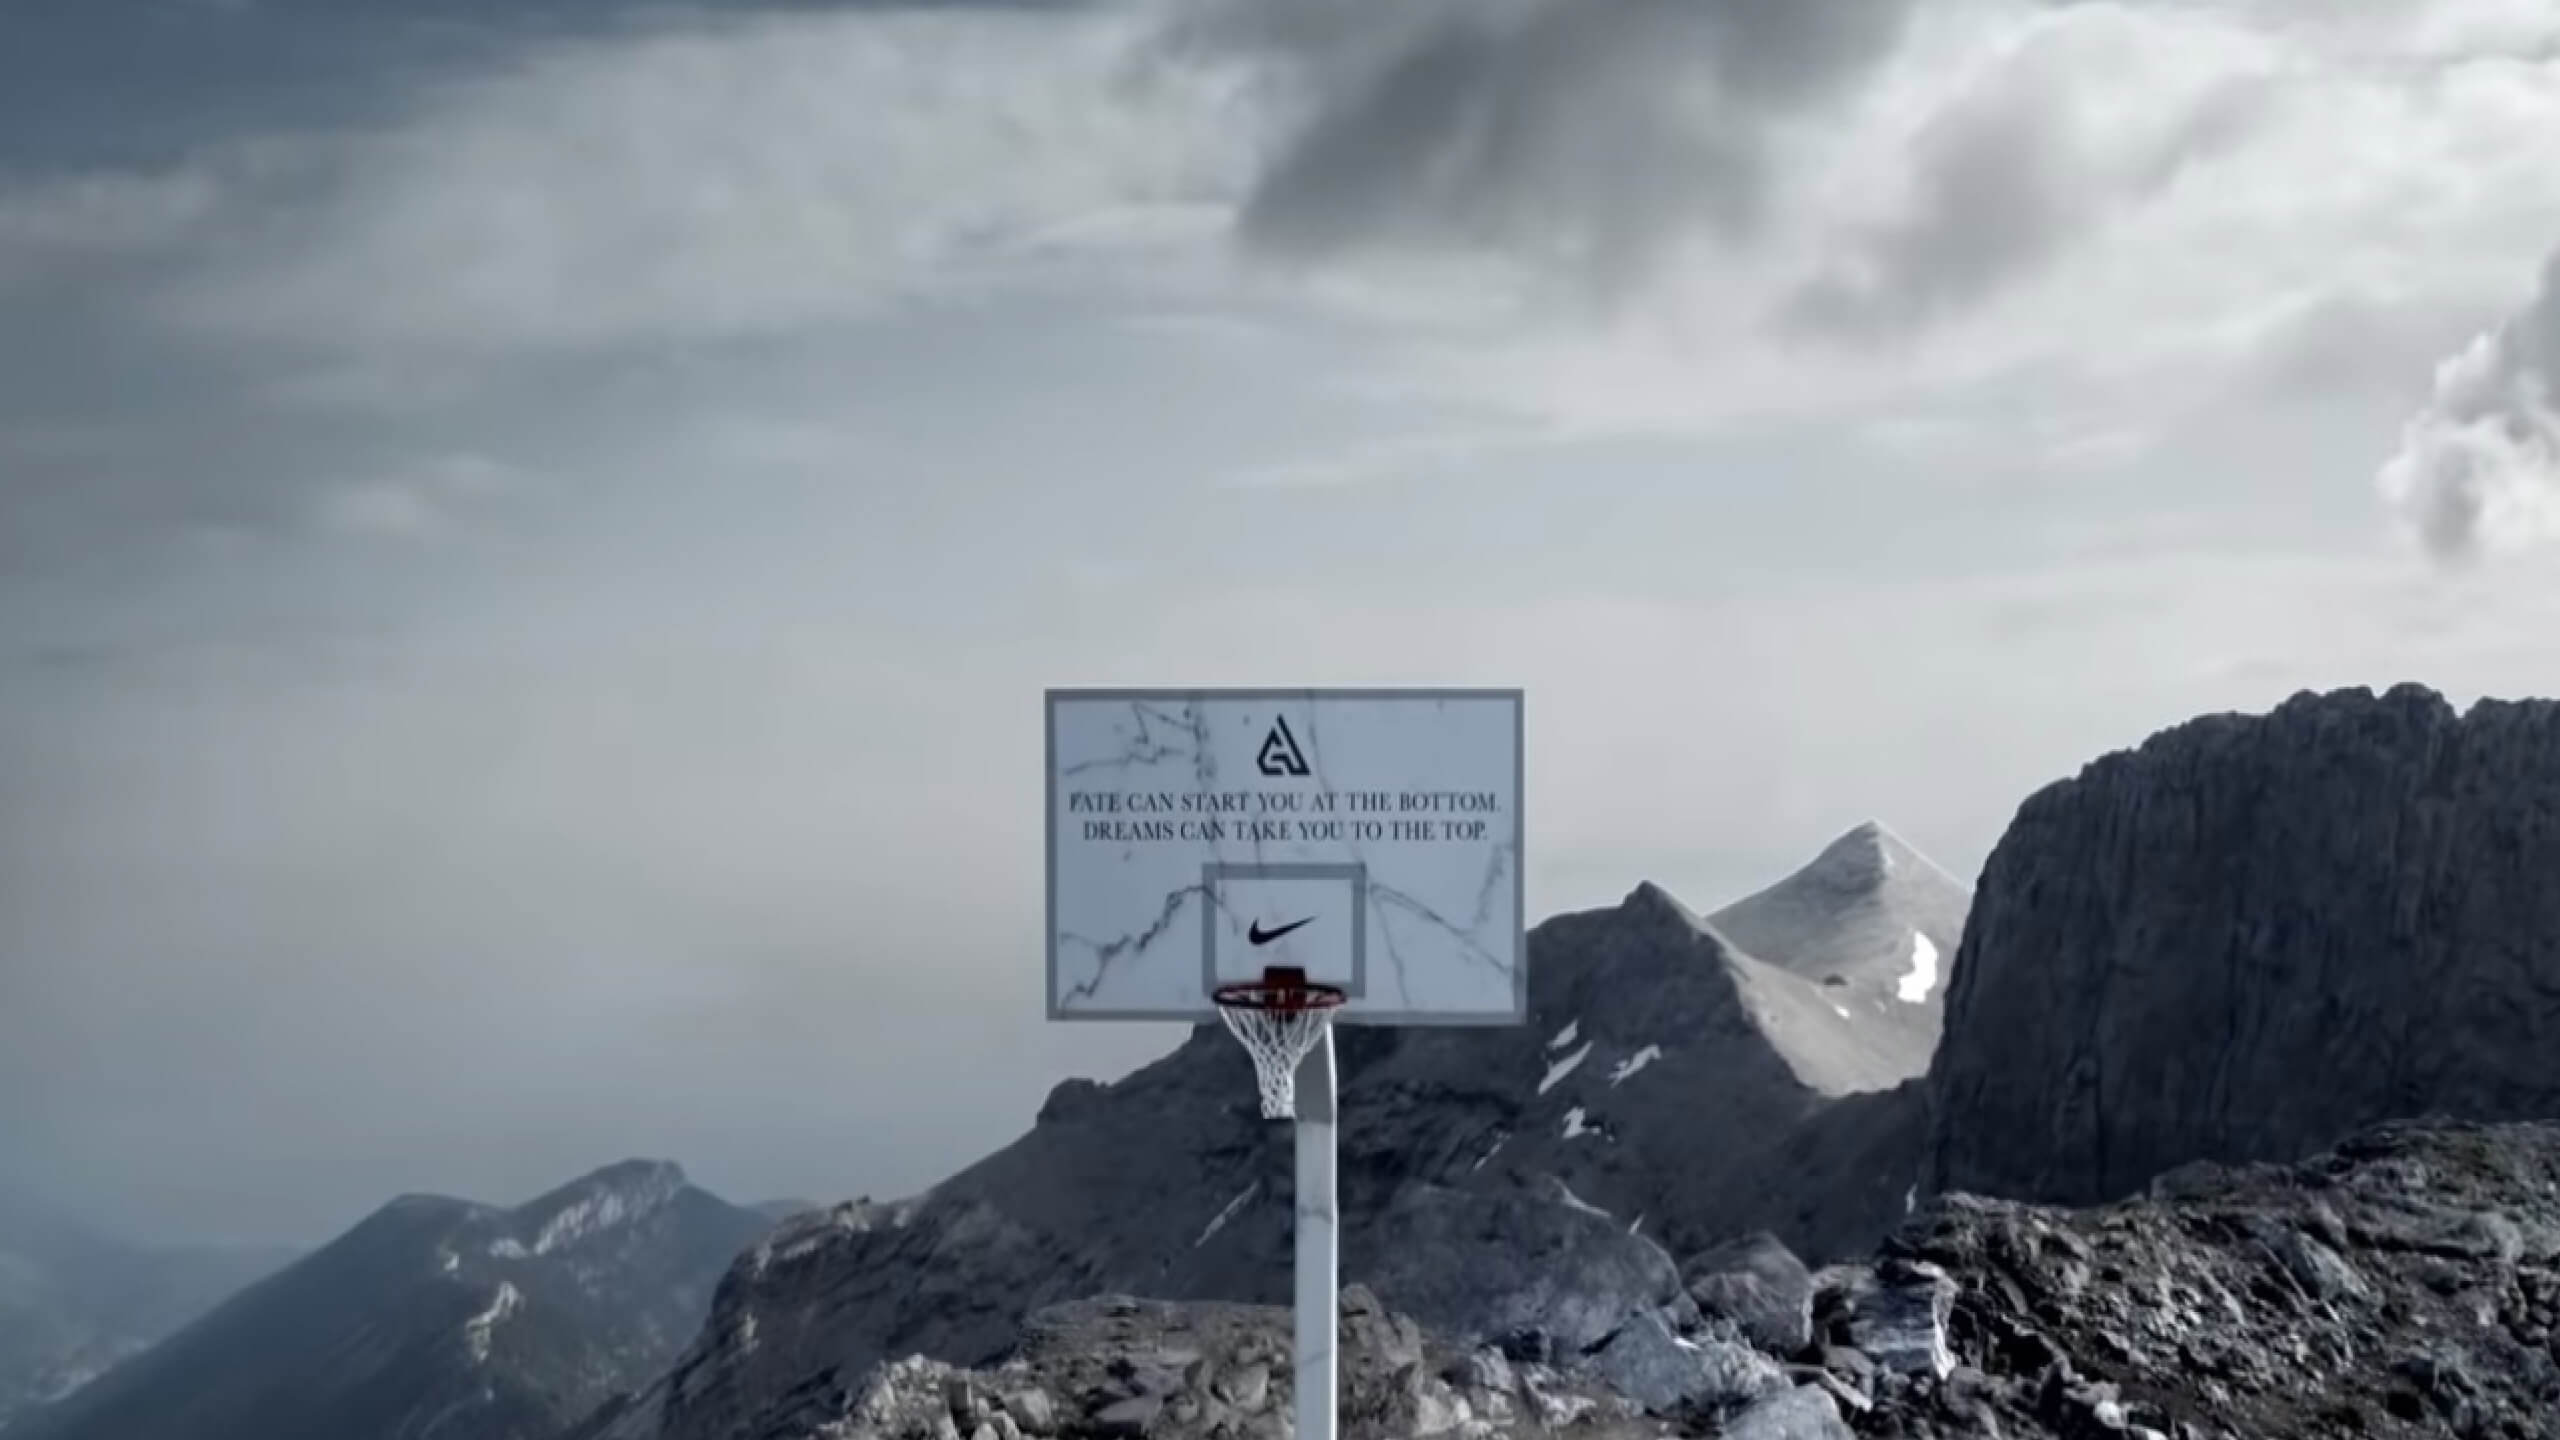 YARD-NIKE ZOOM FREAK 1 Global Launch Mount Olympus Campaign Video